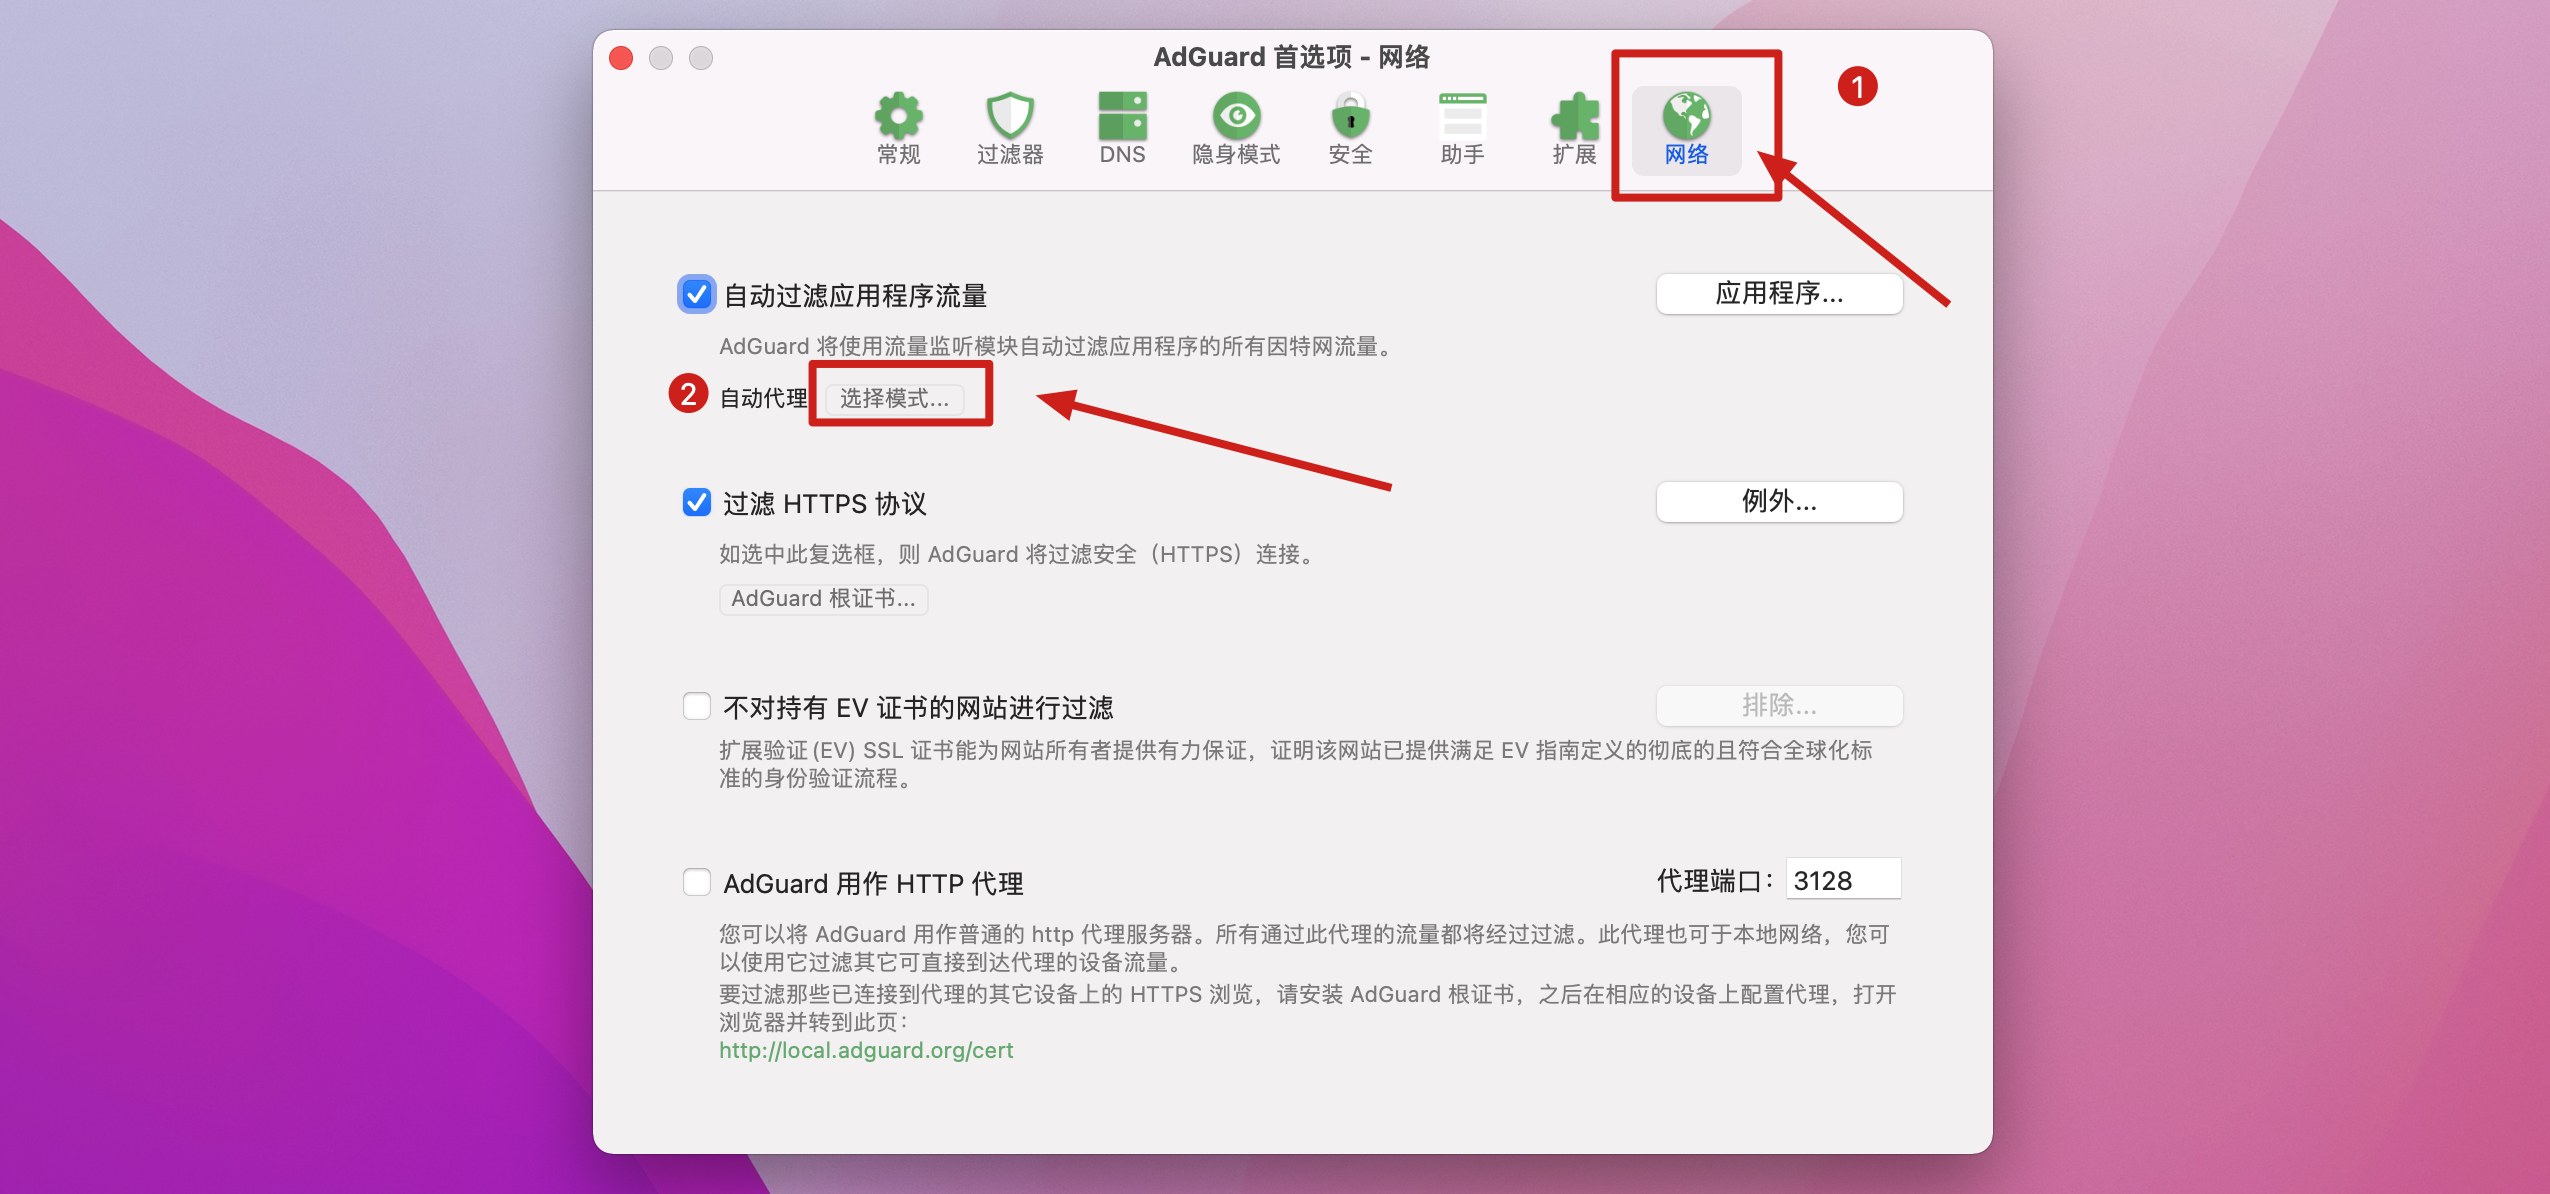 Adguard v2.9.2 (1234) 中文测试破解版 好用的广告过滤软件